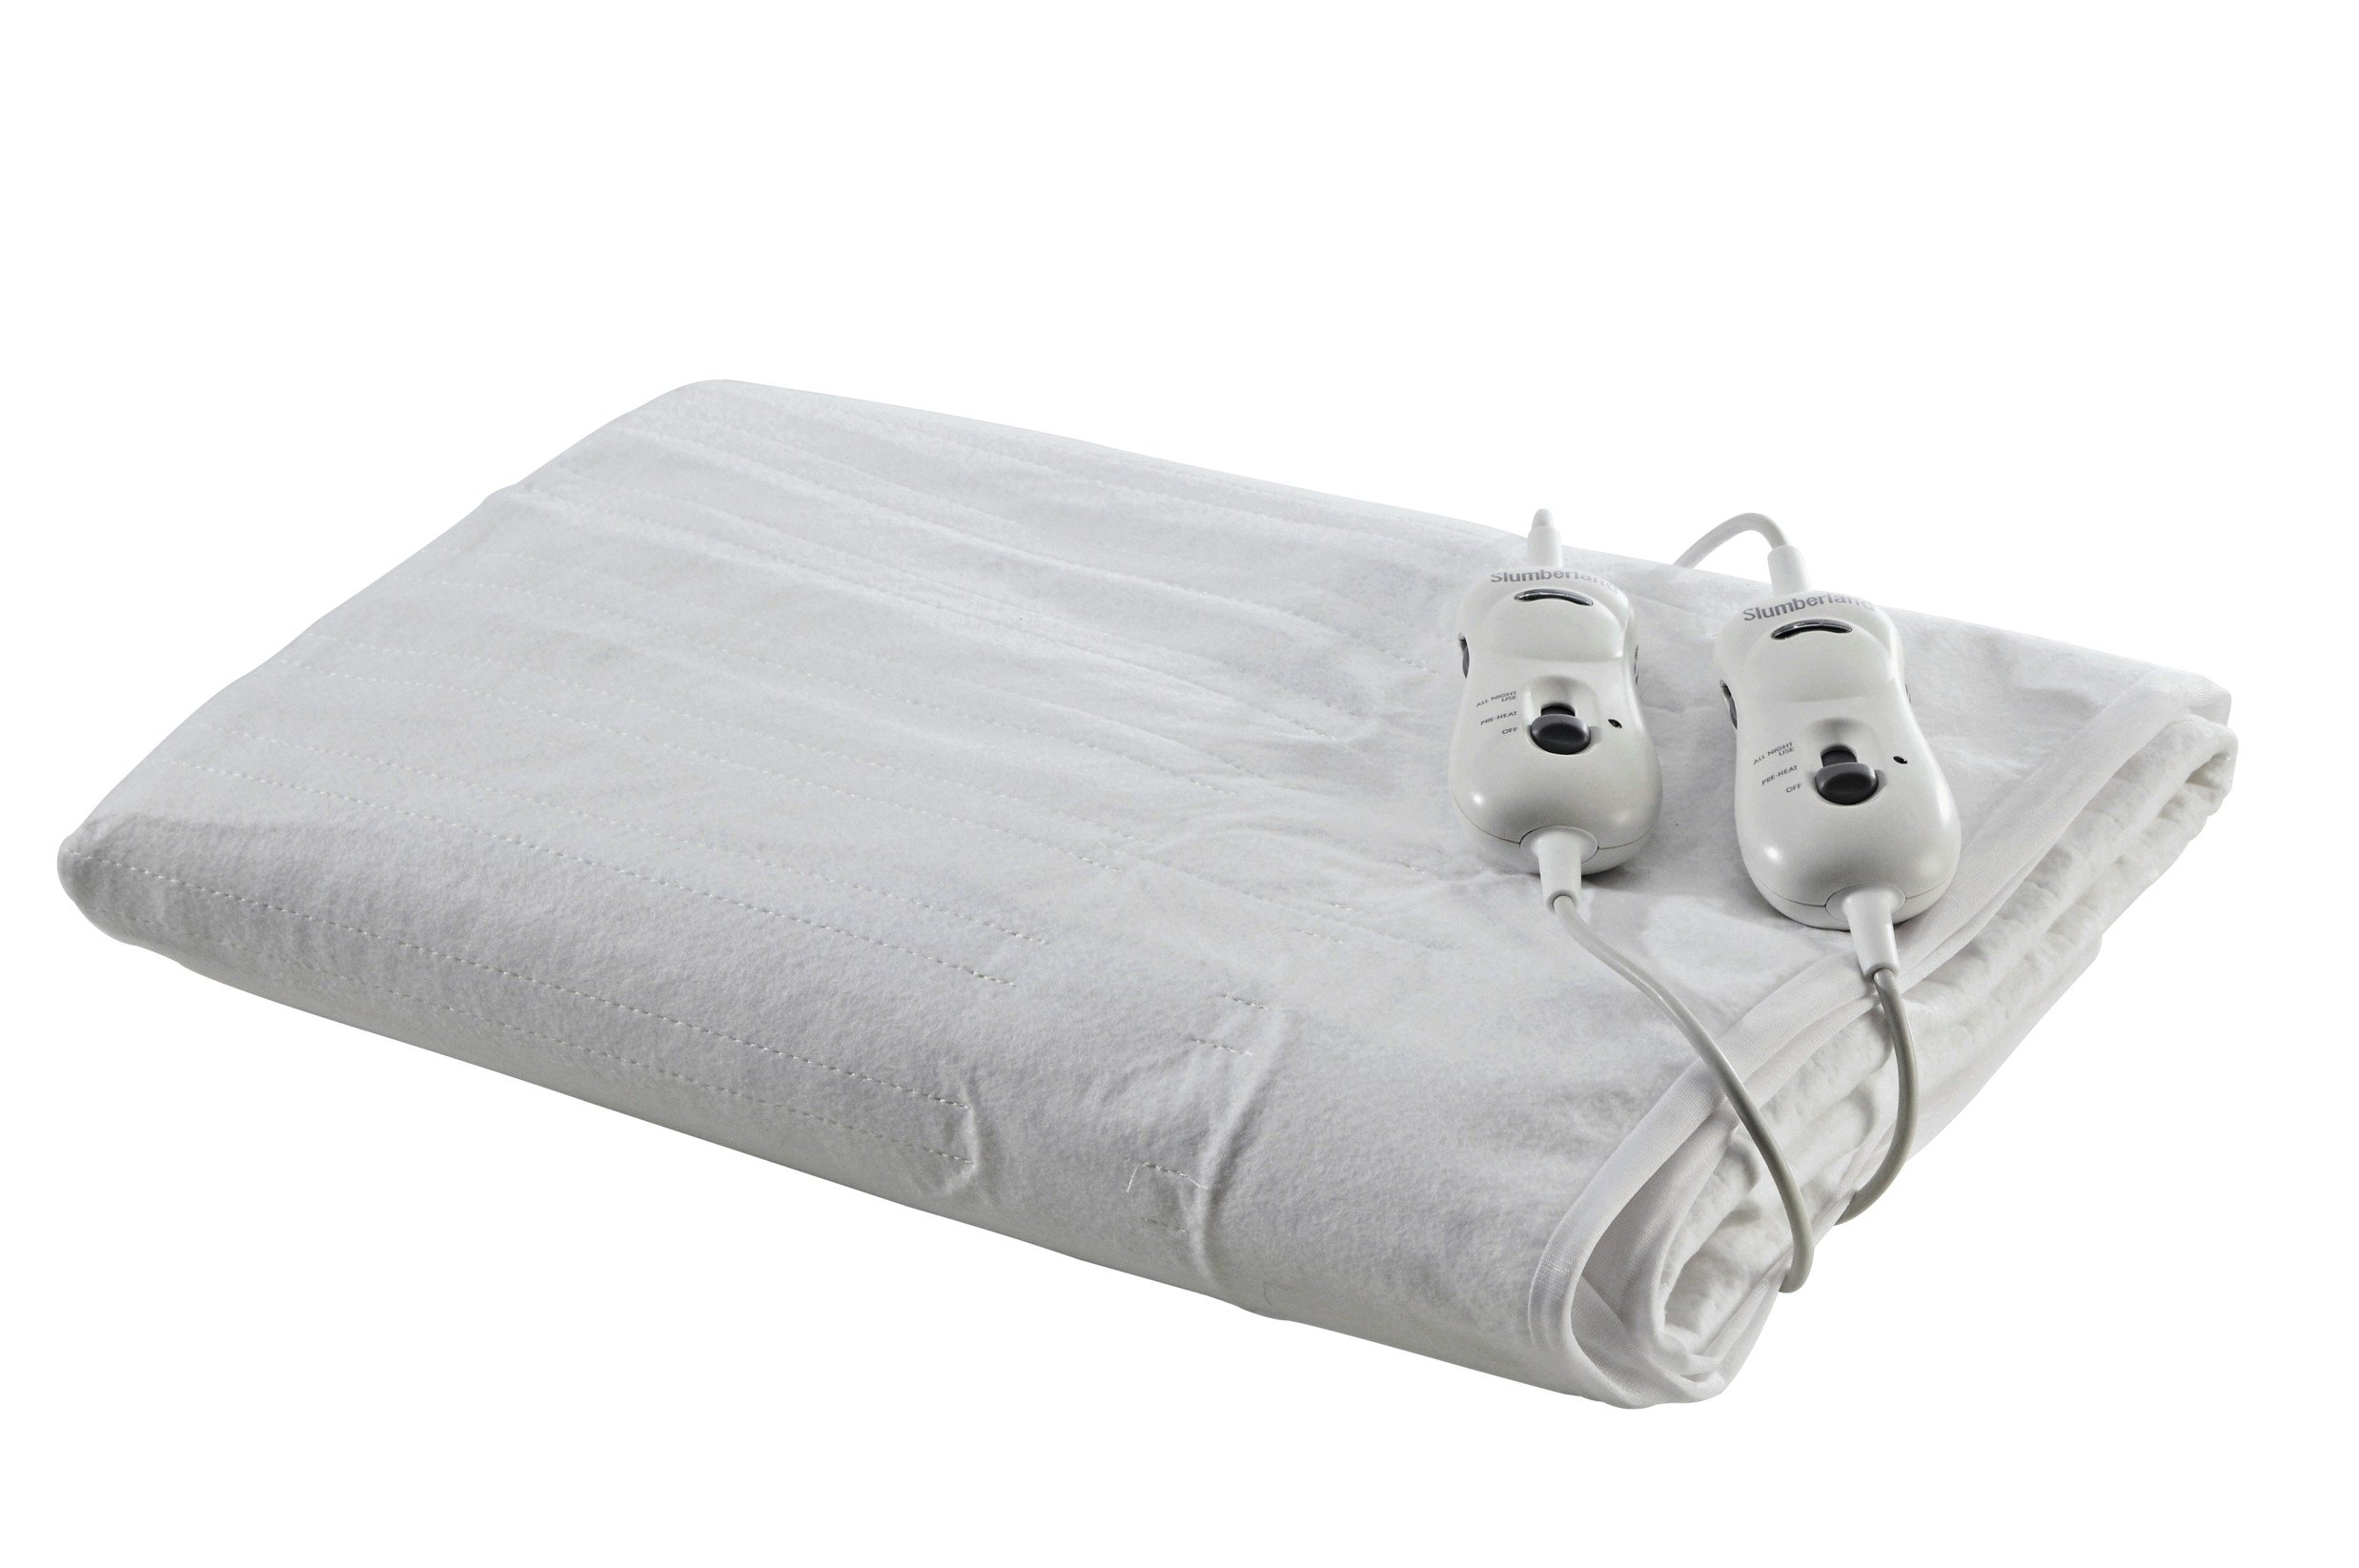 slumberland heated mattress cover review